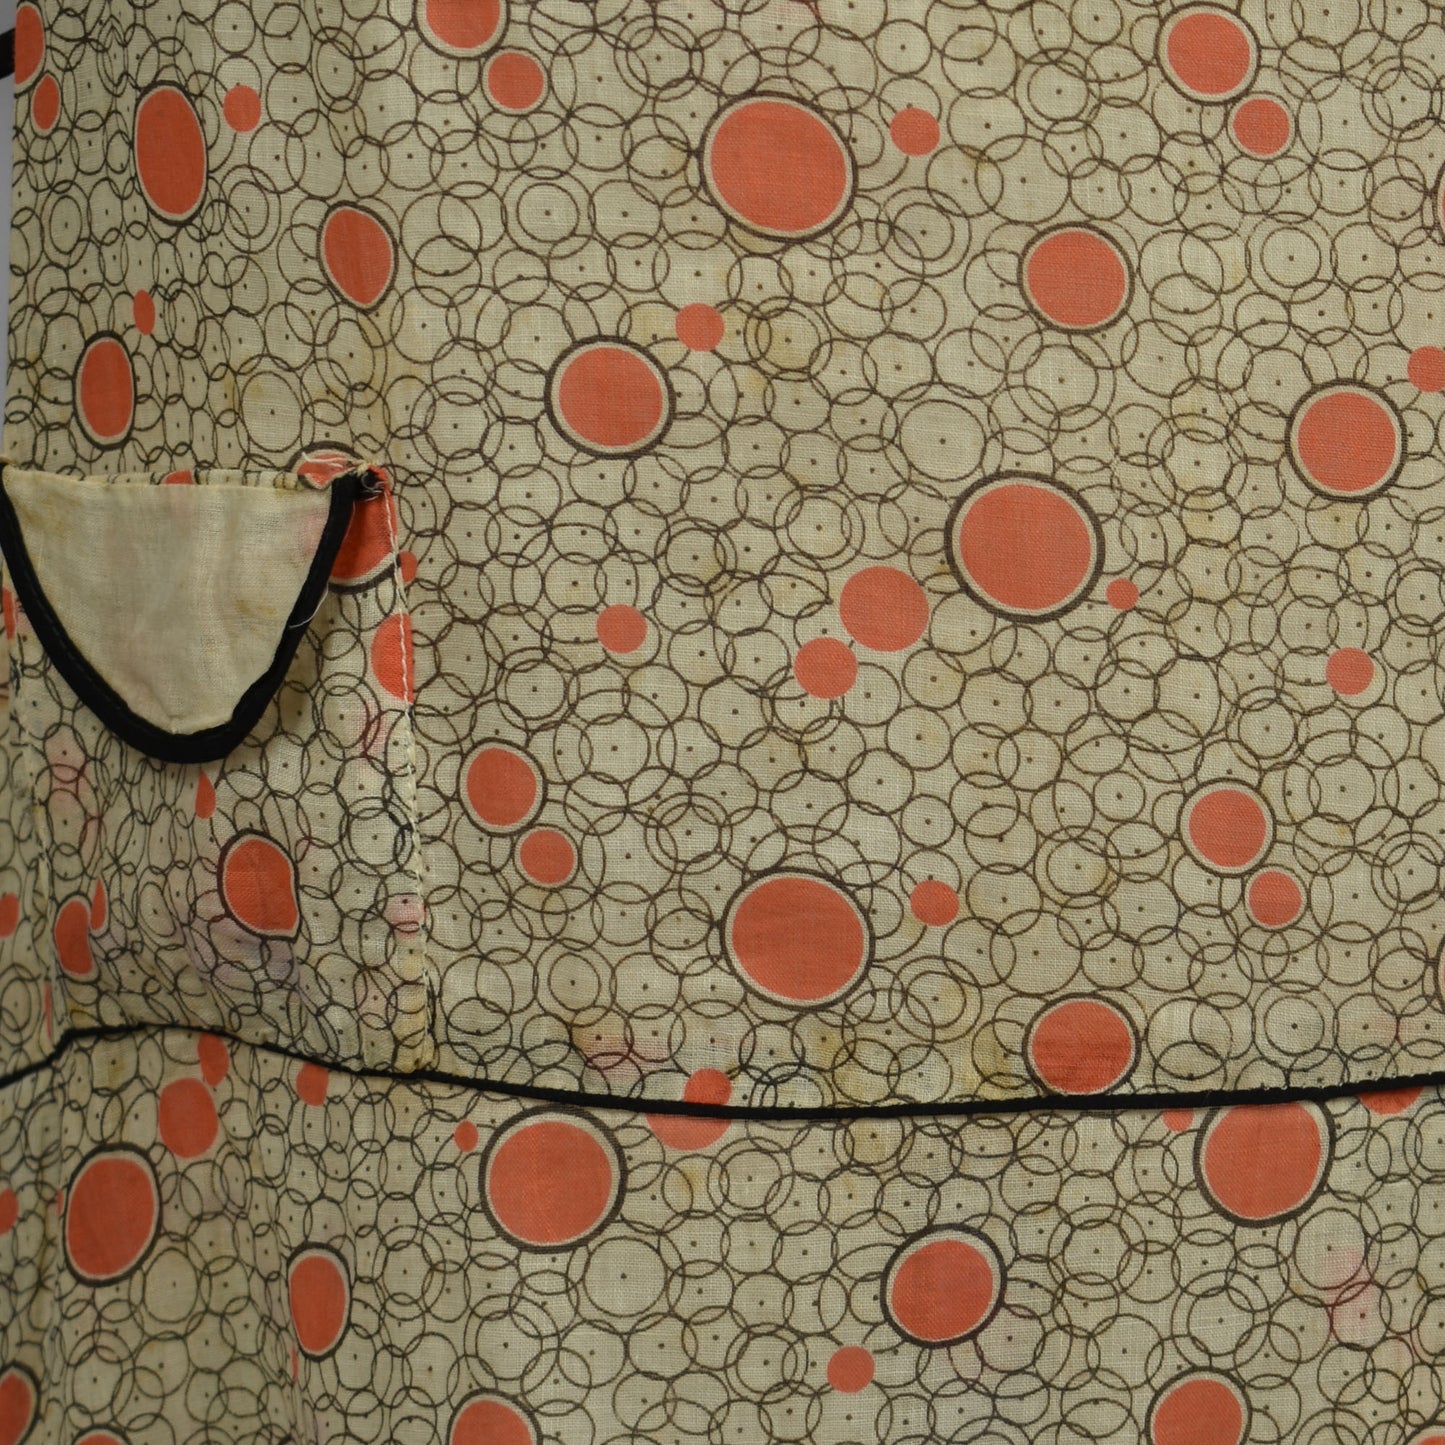 Vintage 20s True Vintage Cotton Dress - Incredible Collar & Pocket Detail